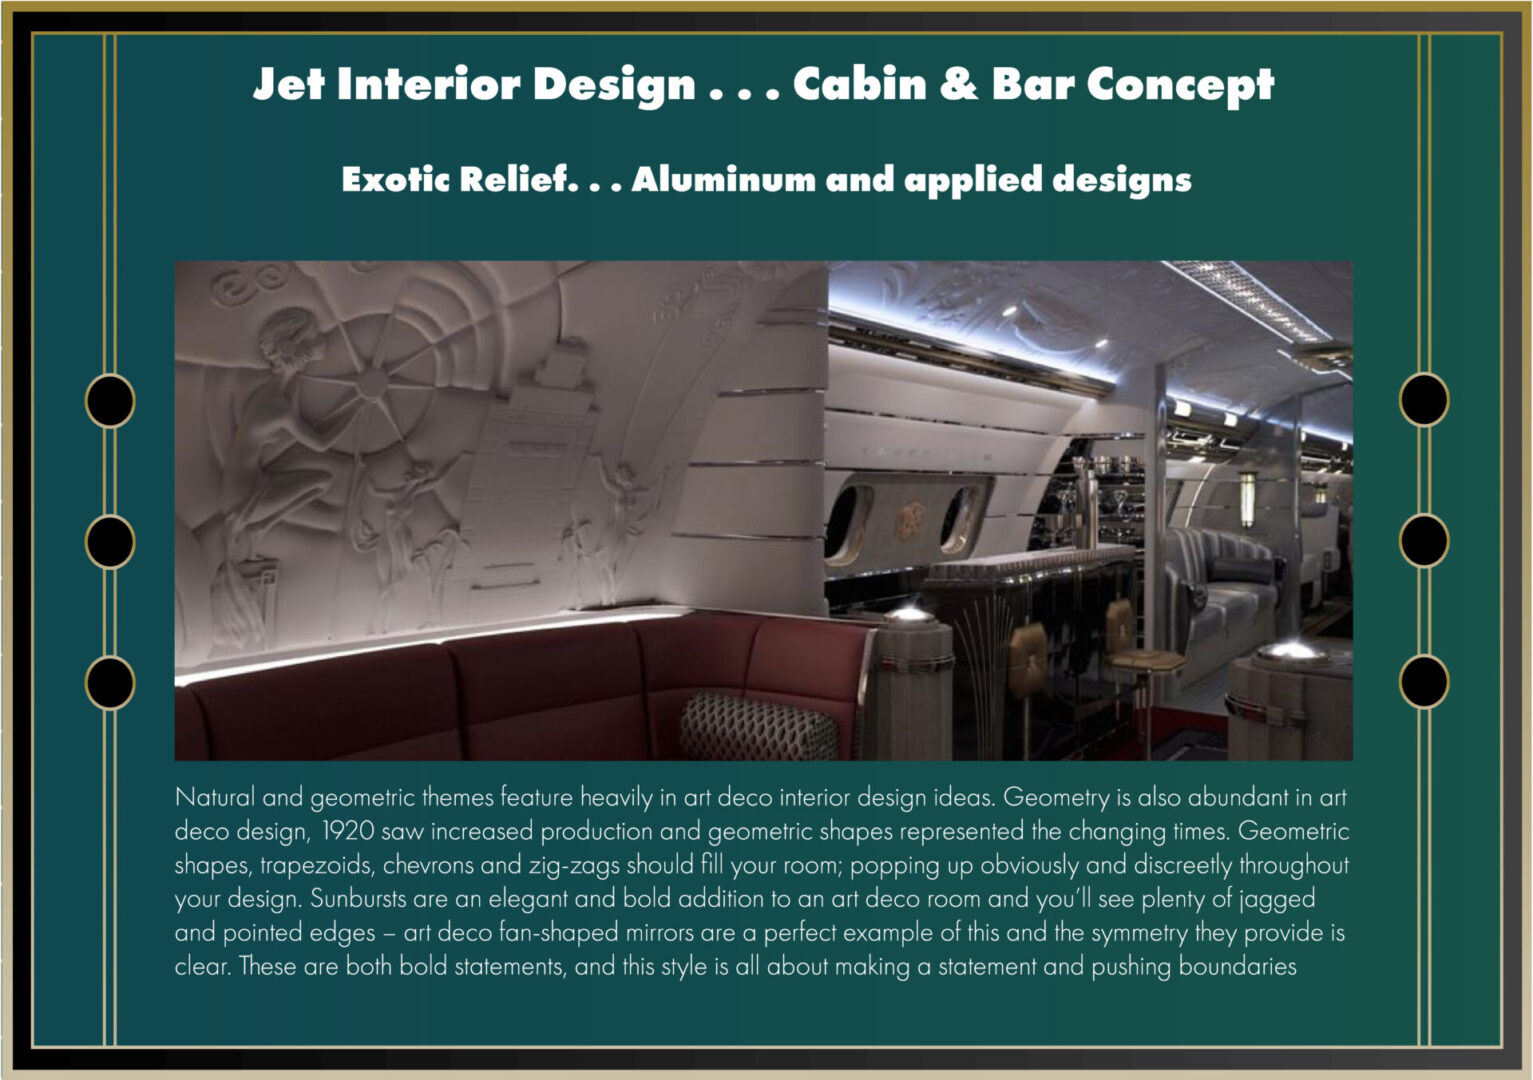 Jet Interior Design with Exotic Relief Concept